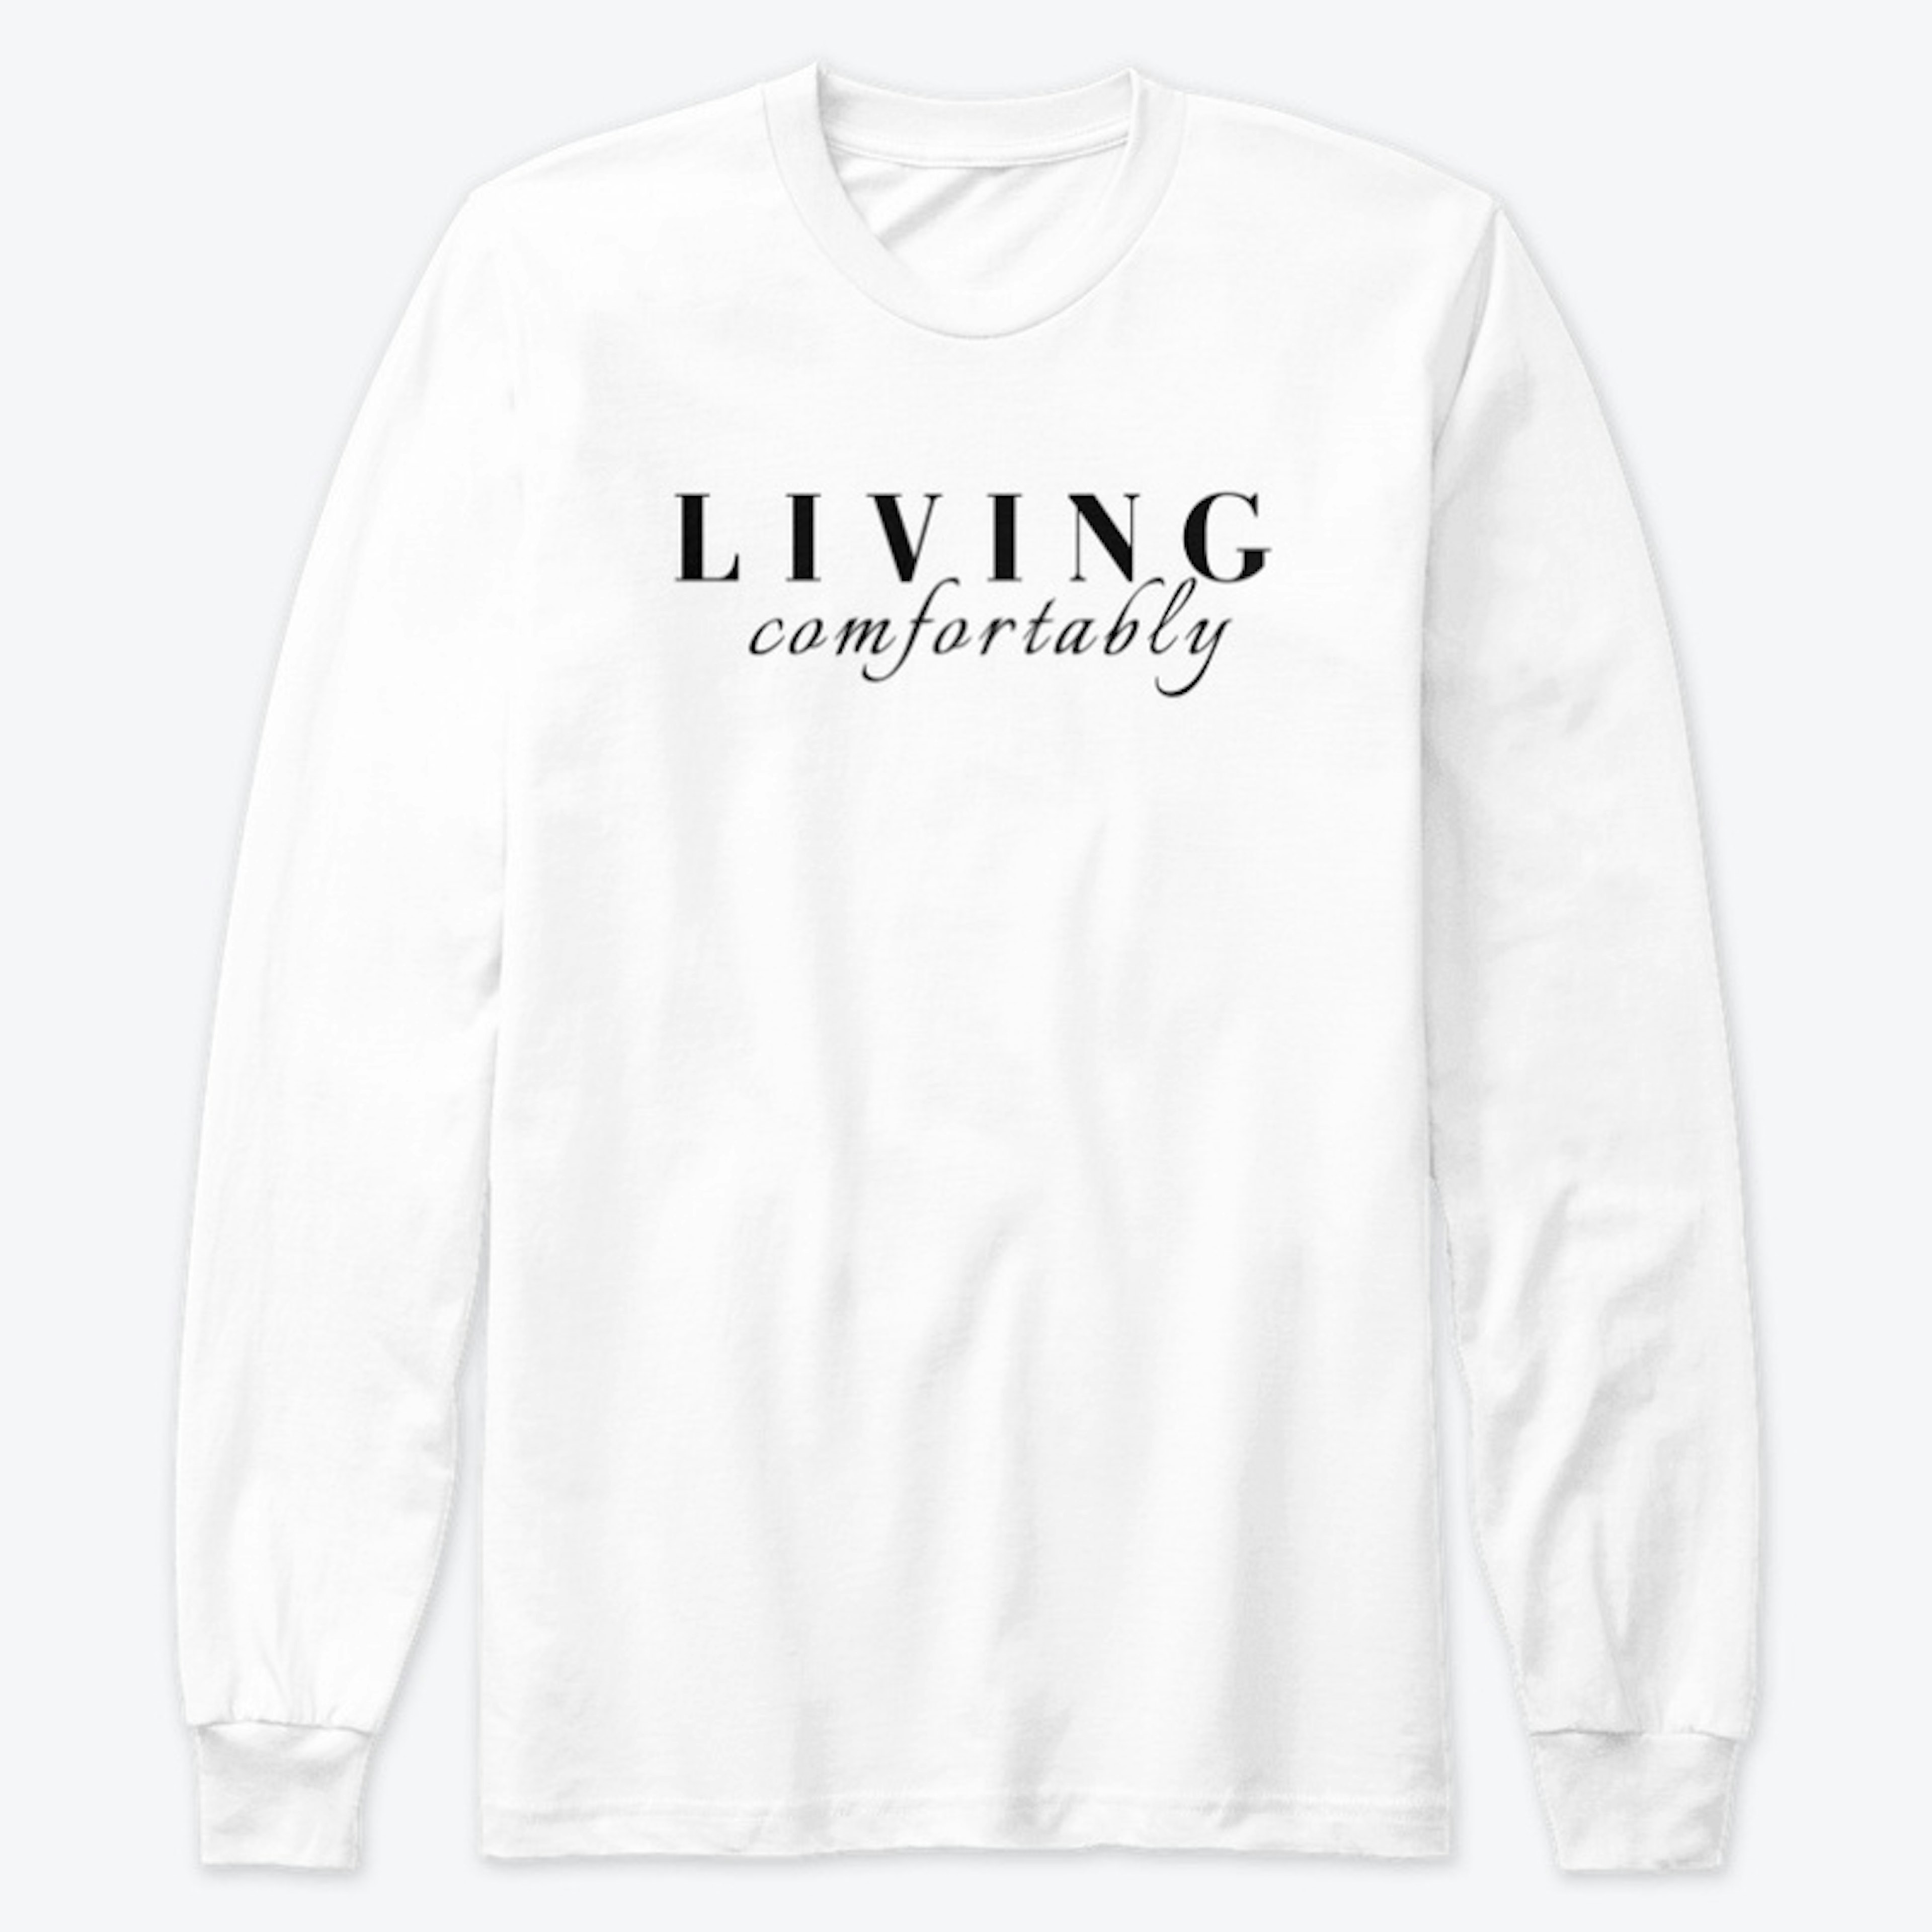 Living Comfortably - White